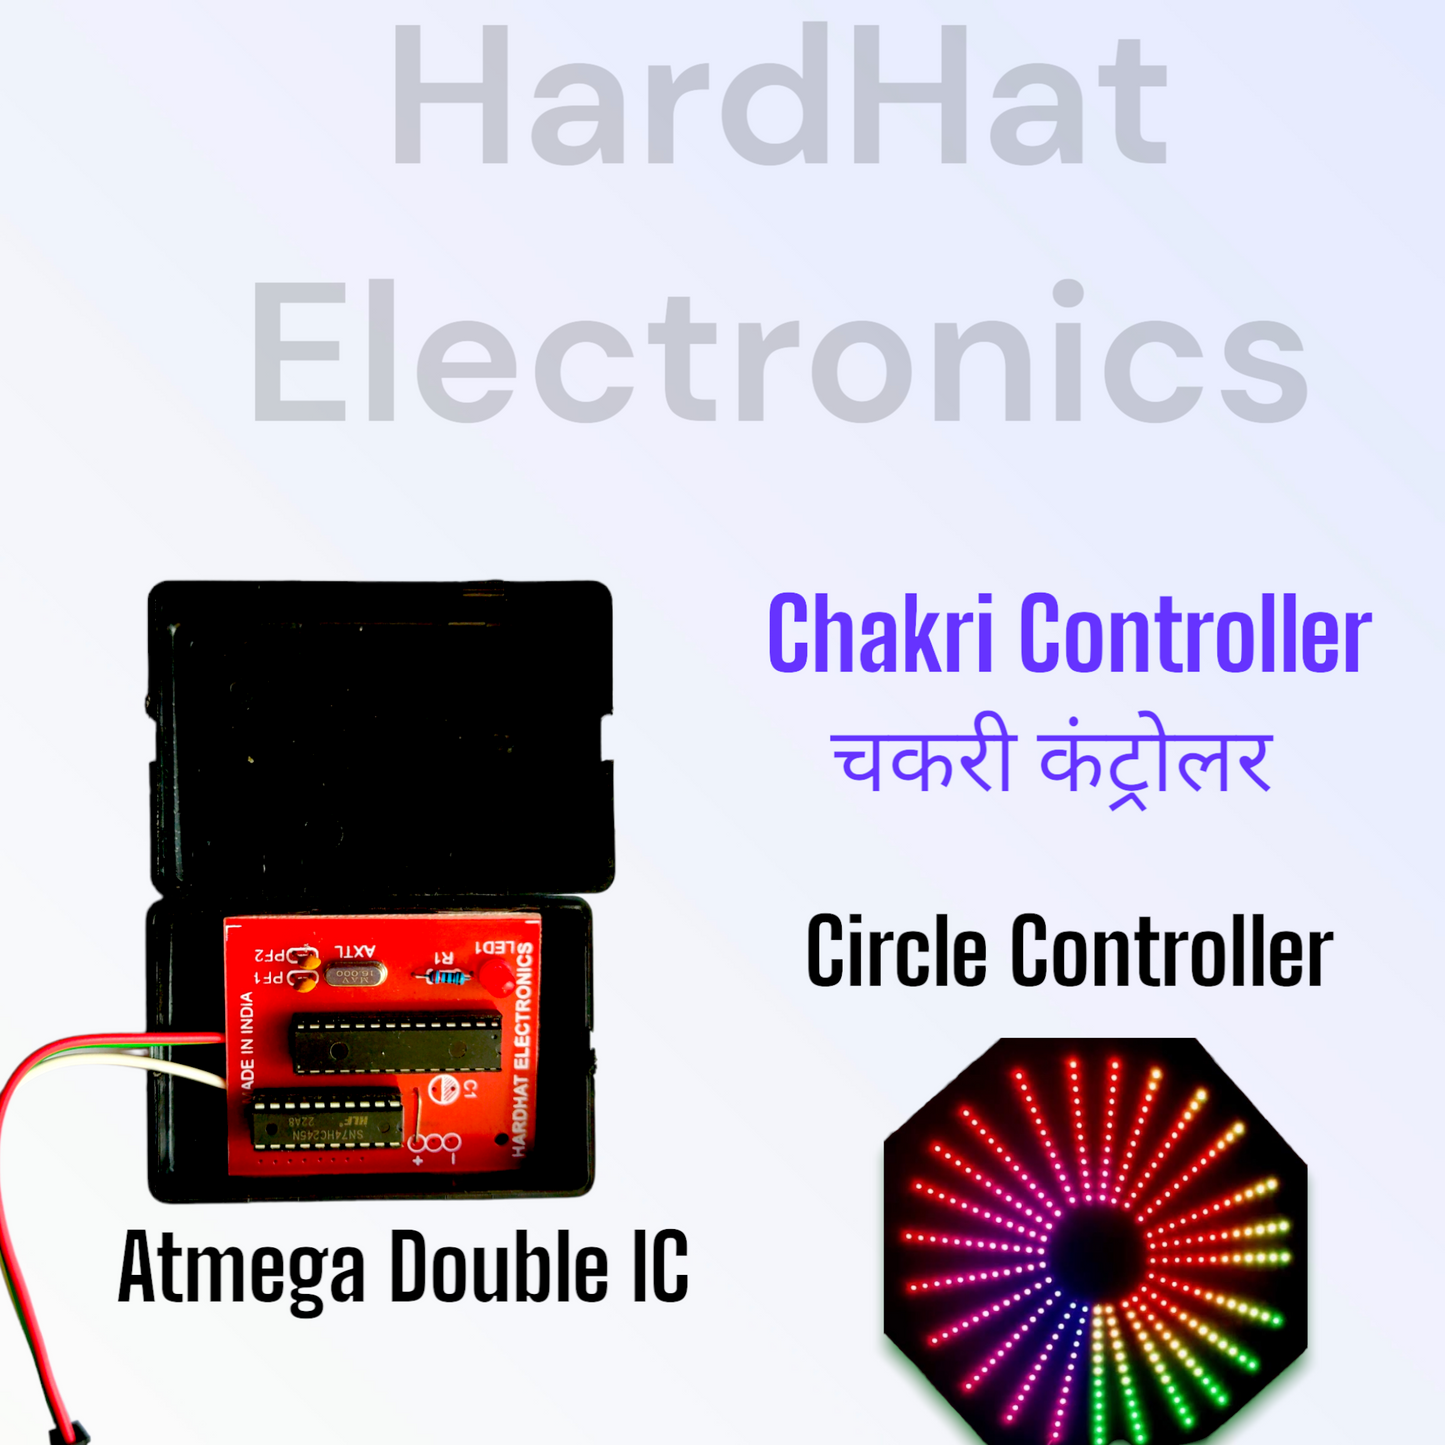 Chakri Controller Double IC (Atmega8A)